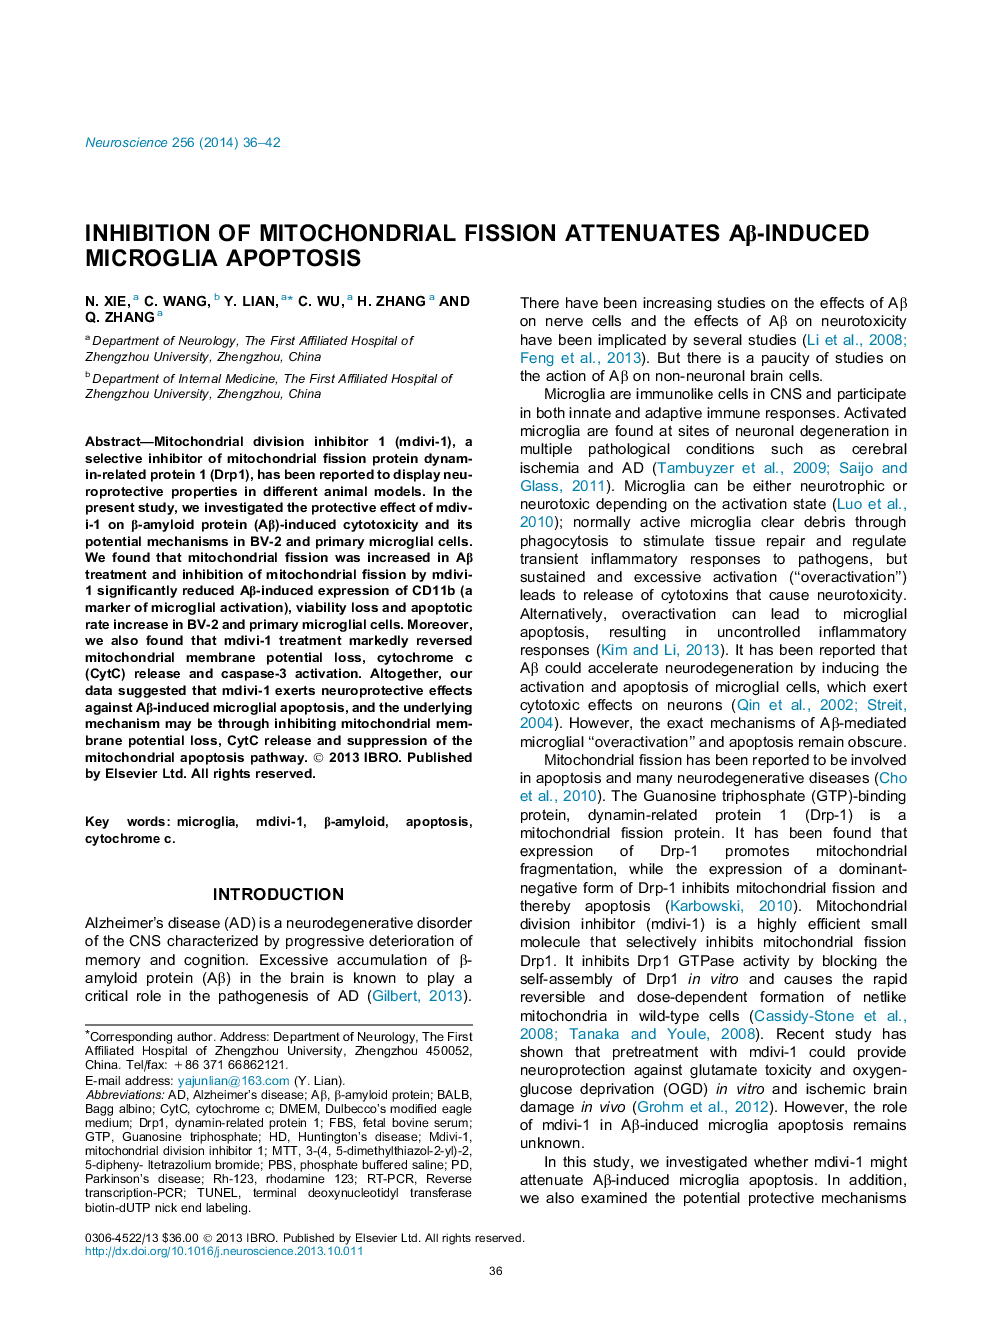 Inhibition of mitochondrial fission attenuates AÎ²-induced microglia apoptosis